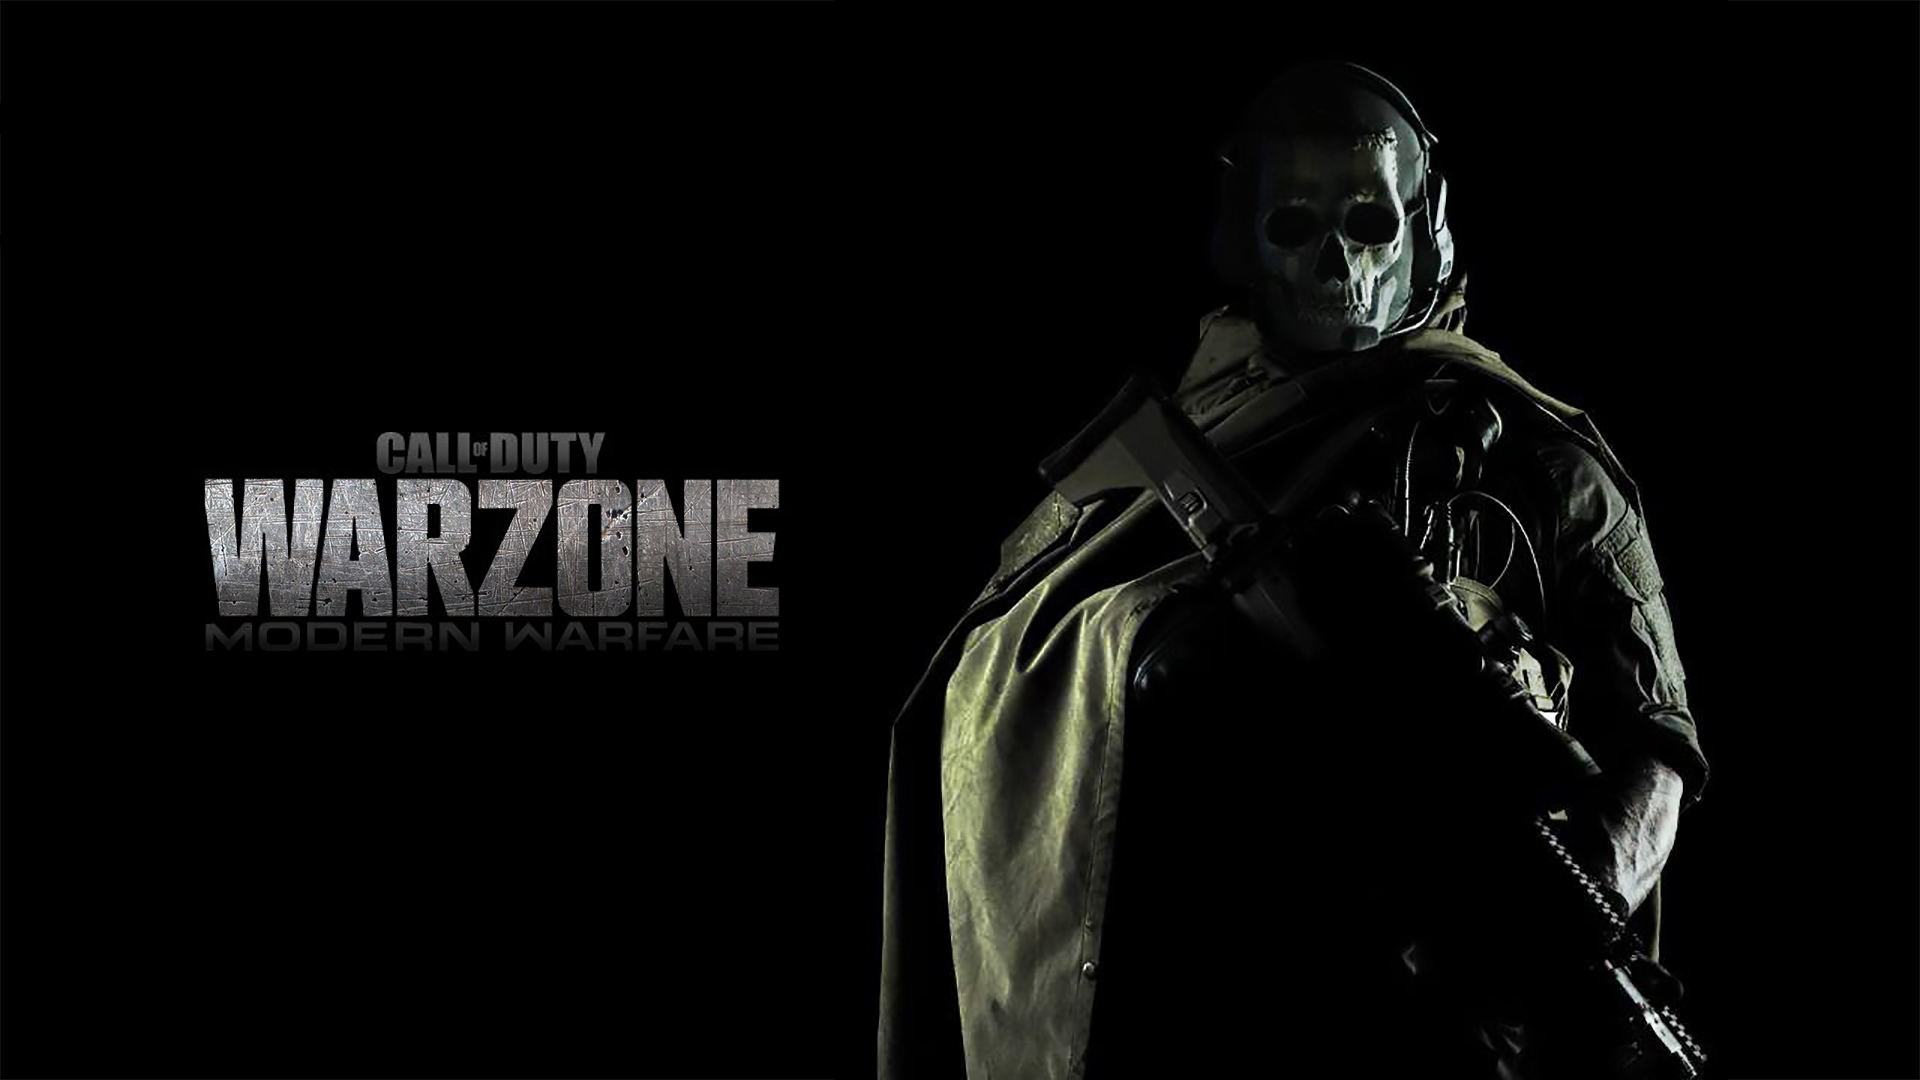 Call Of Duty Modern Warfare Warzone Wallpaper 2 by thetruemask on